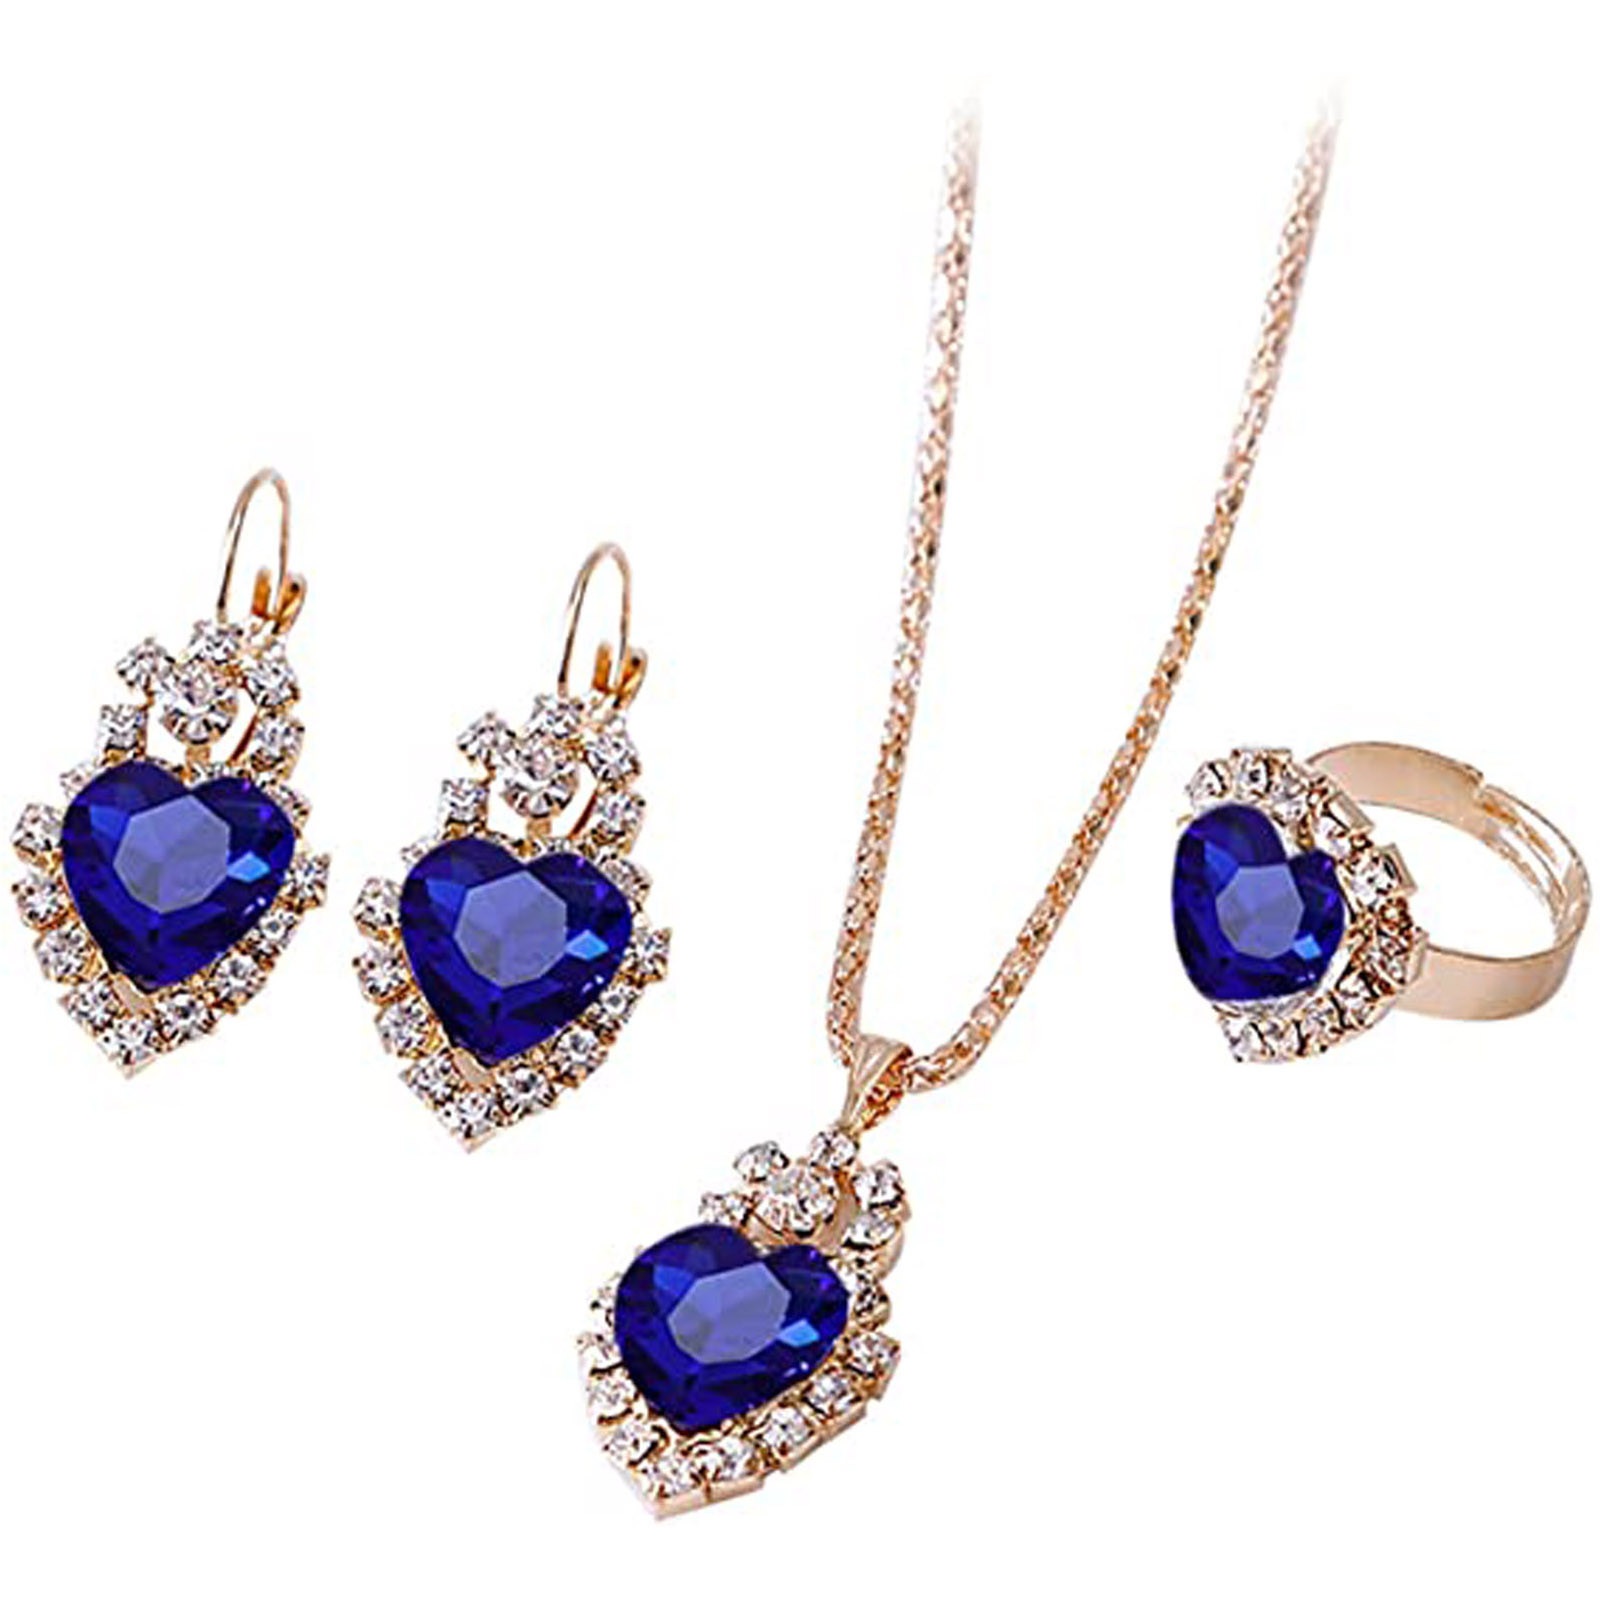 Floleo Clearance Love Heart Necklace Pendant Earrings Ring Set Jewelry For Women Girls Bracelet Necklace Earrings Set Valentine's Day Gift - image 1 of 1